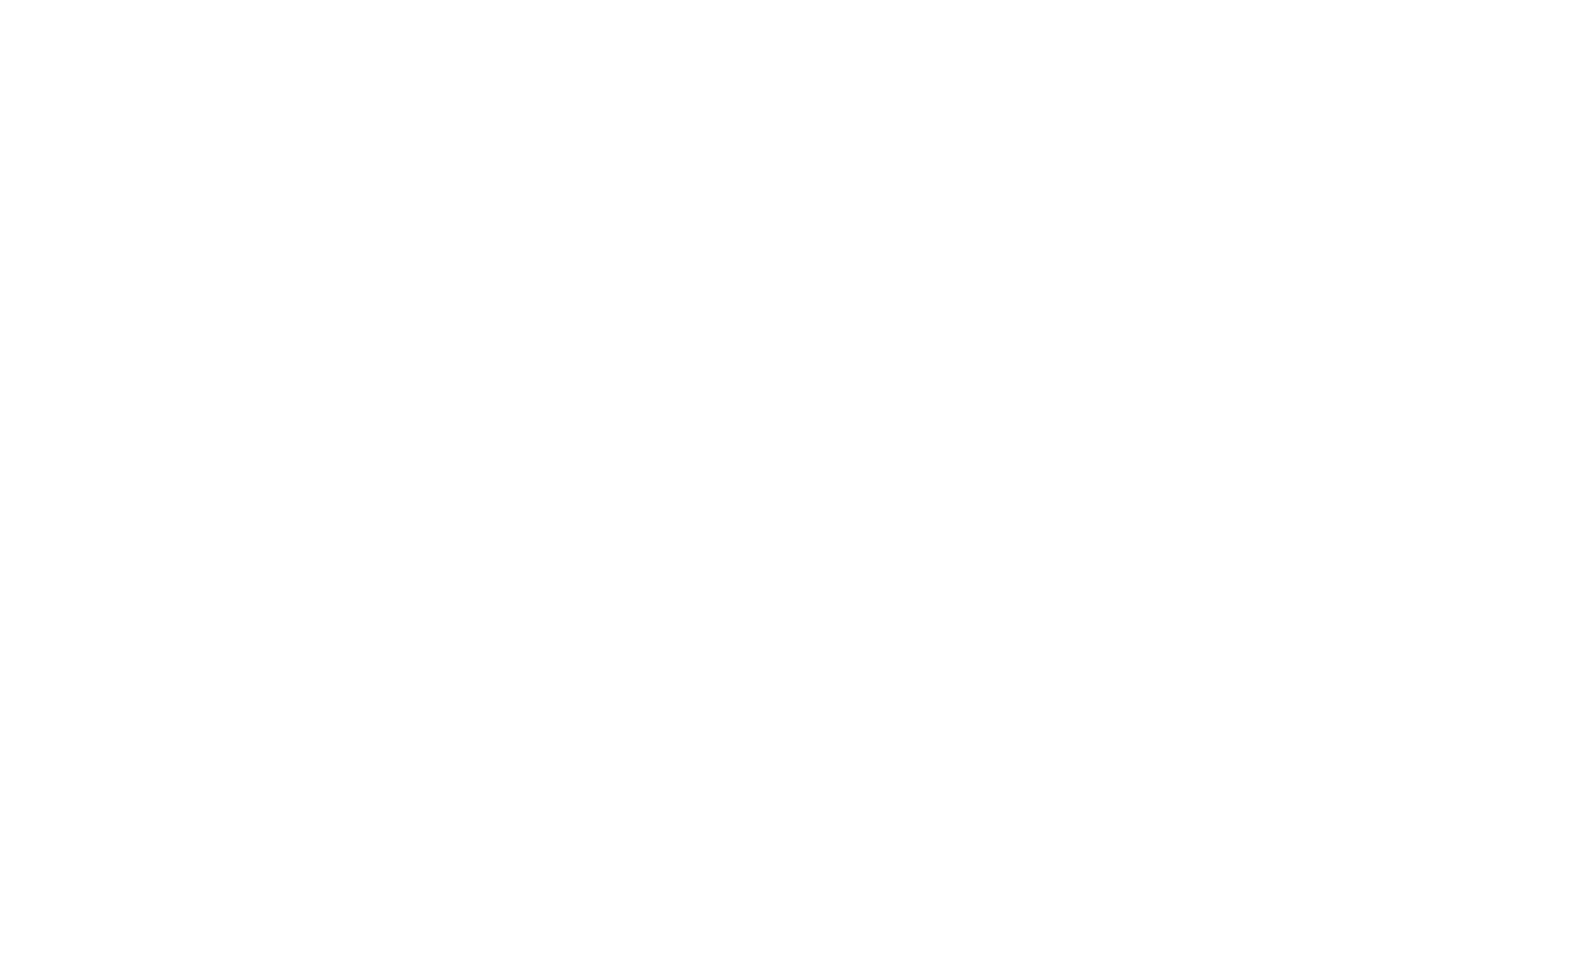 SM Investments Corporation logo large for dark backgrounds (transparent PNG)